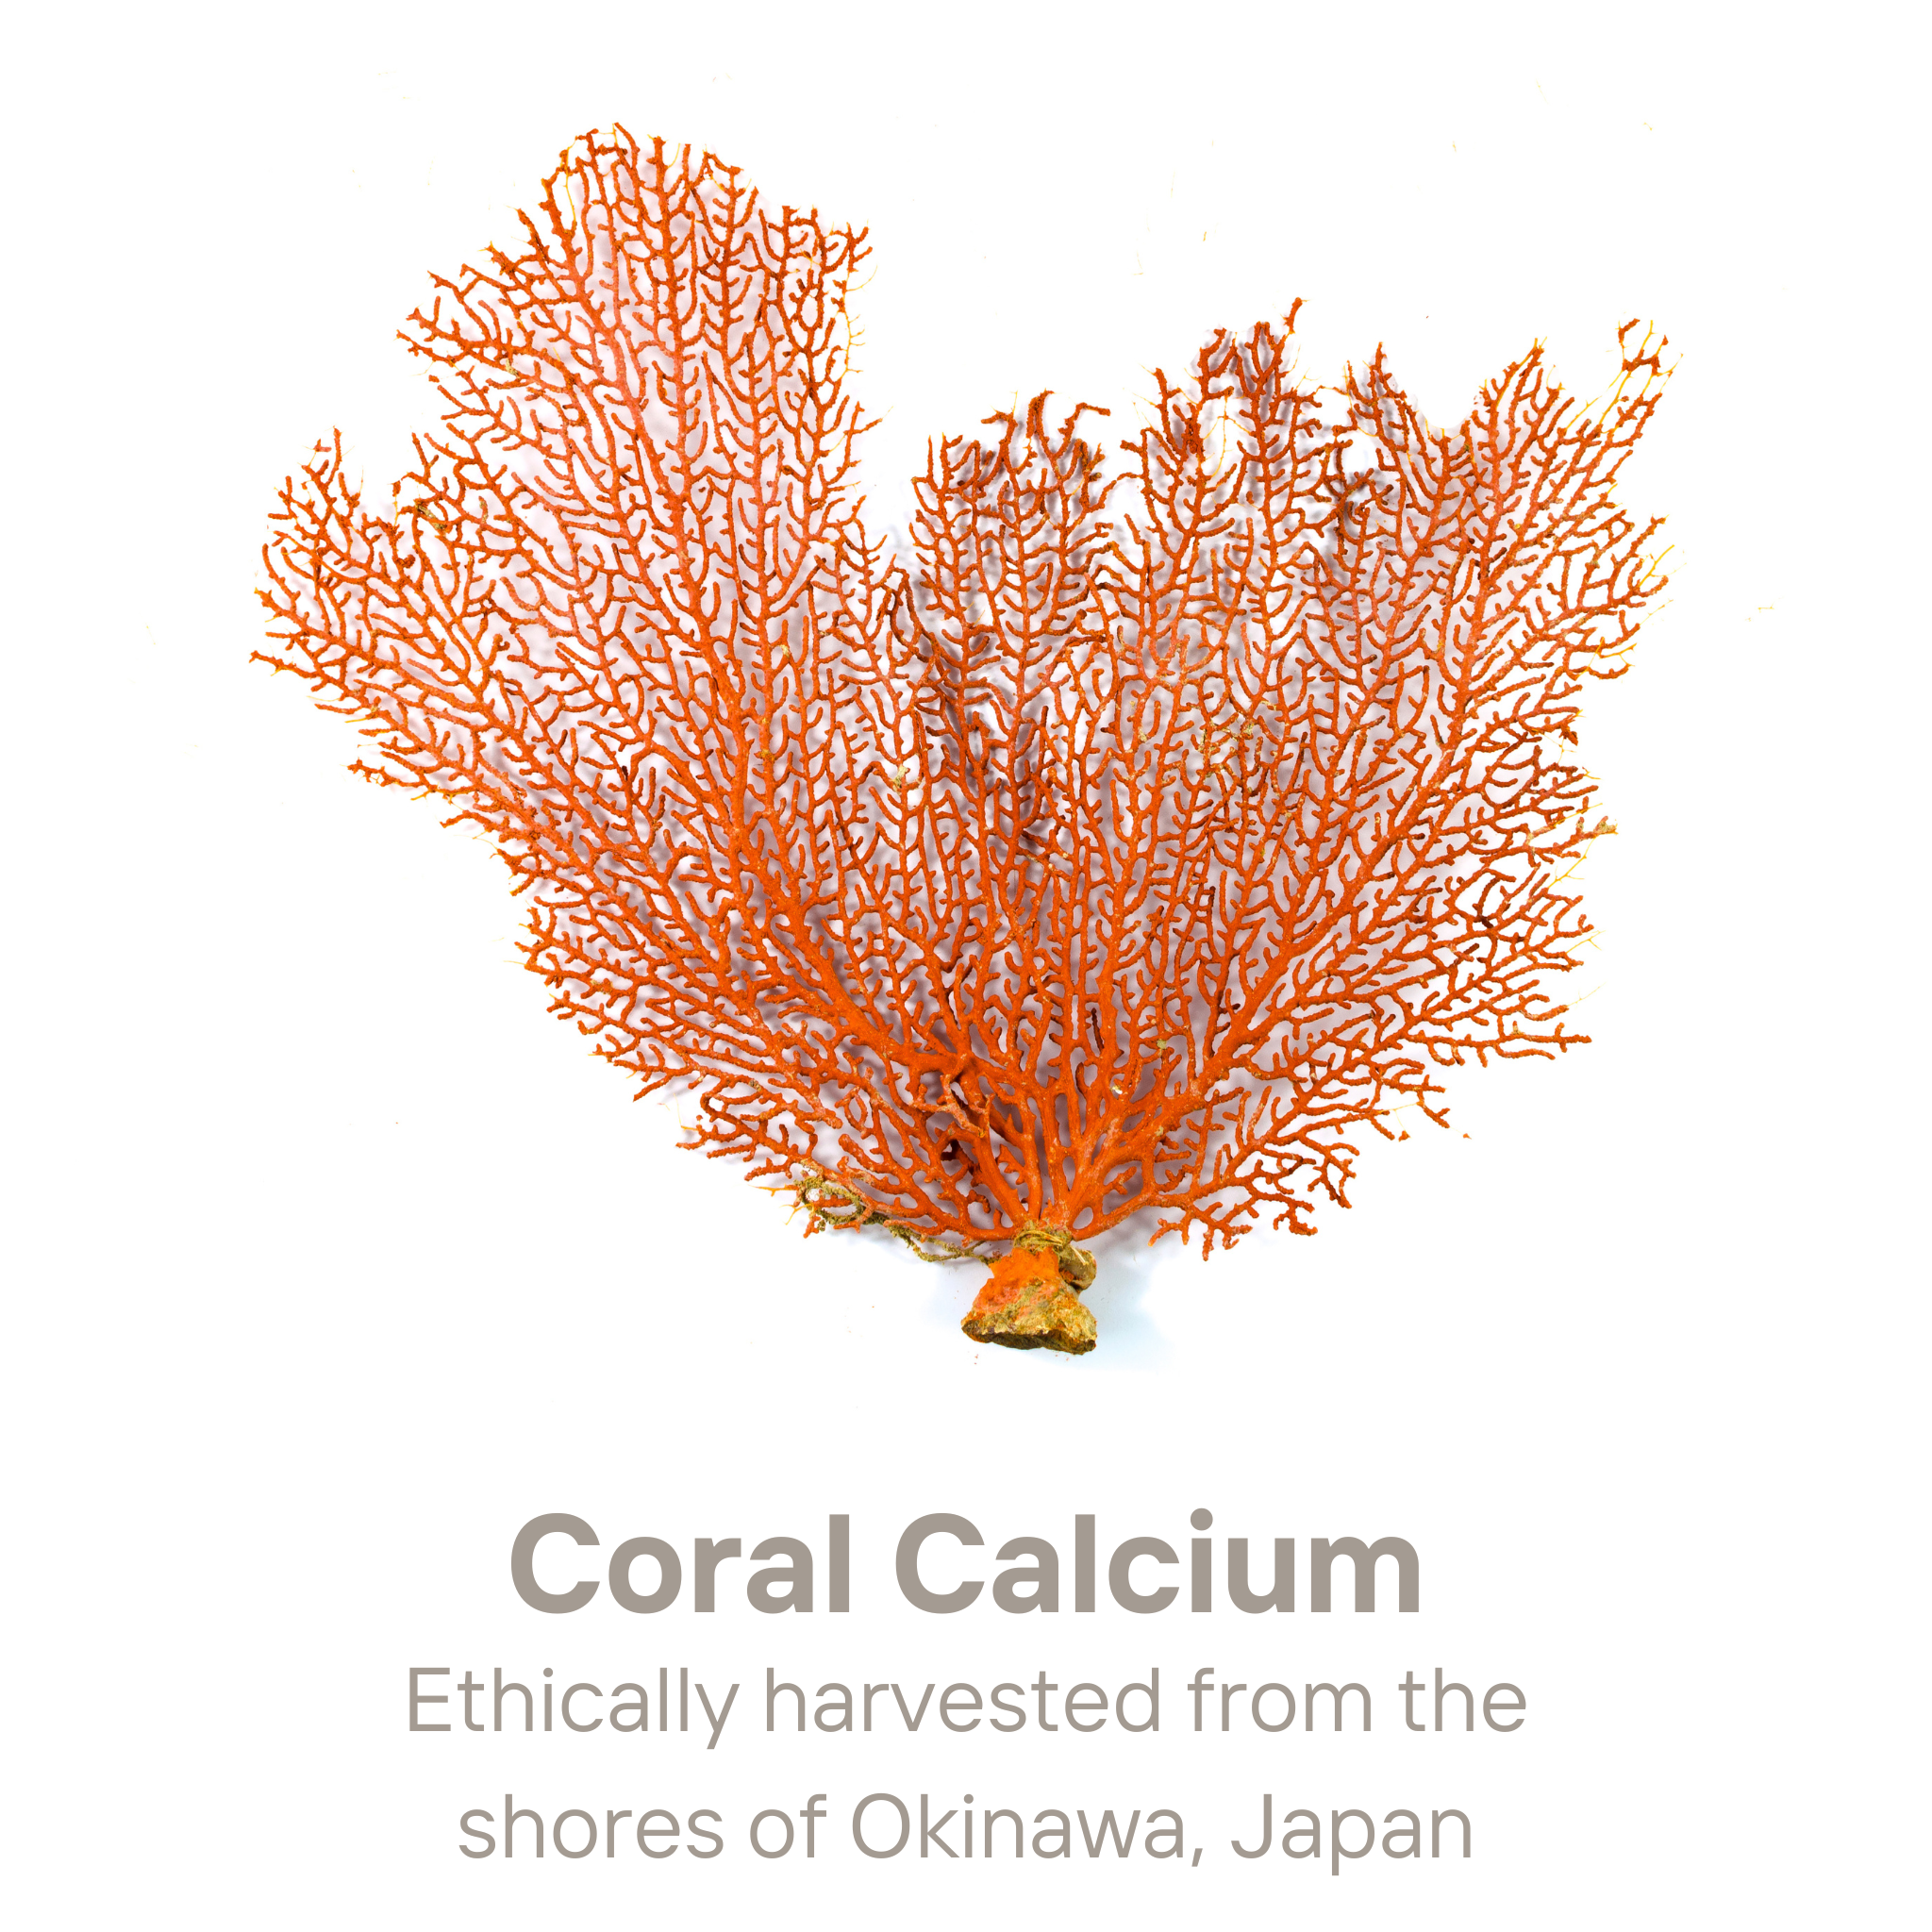 Okinawa Coral Calcium Supplements - Immune & Supporting Bone Health with Magnesium, Zinc, Potassium, Vitamins & Minerals